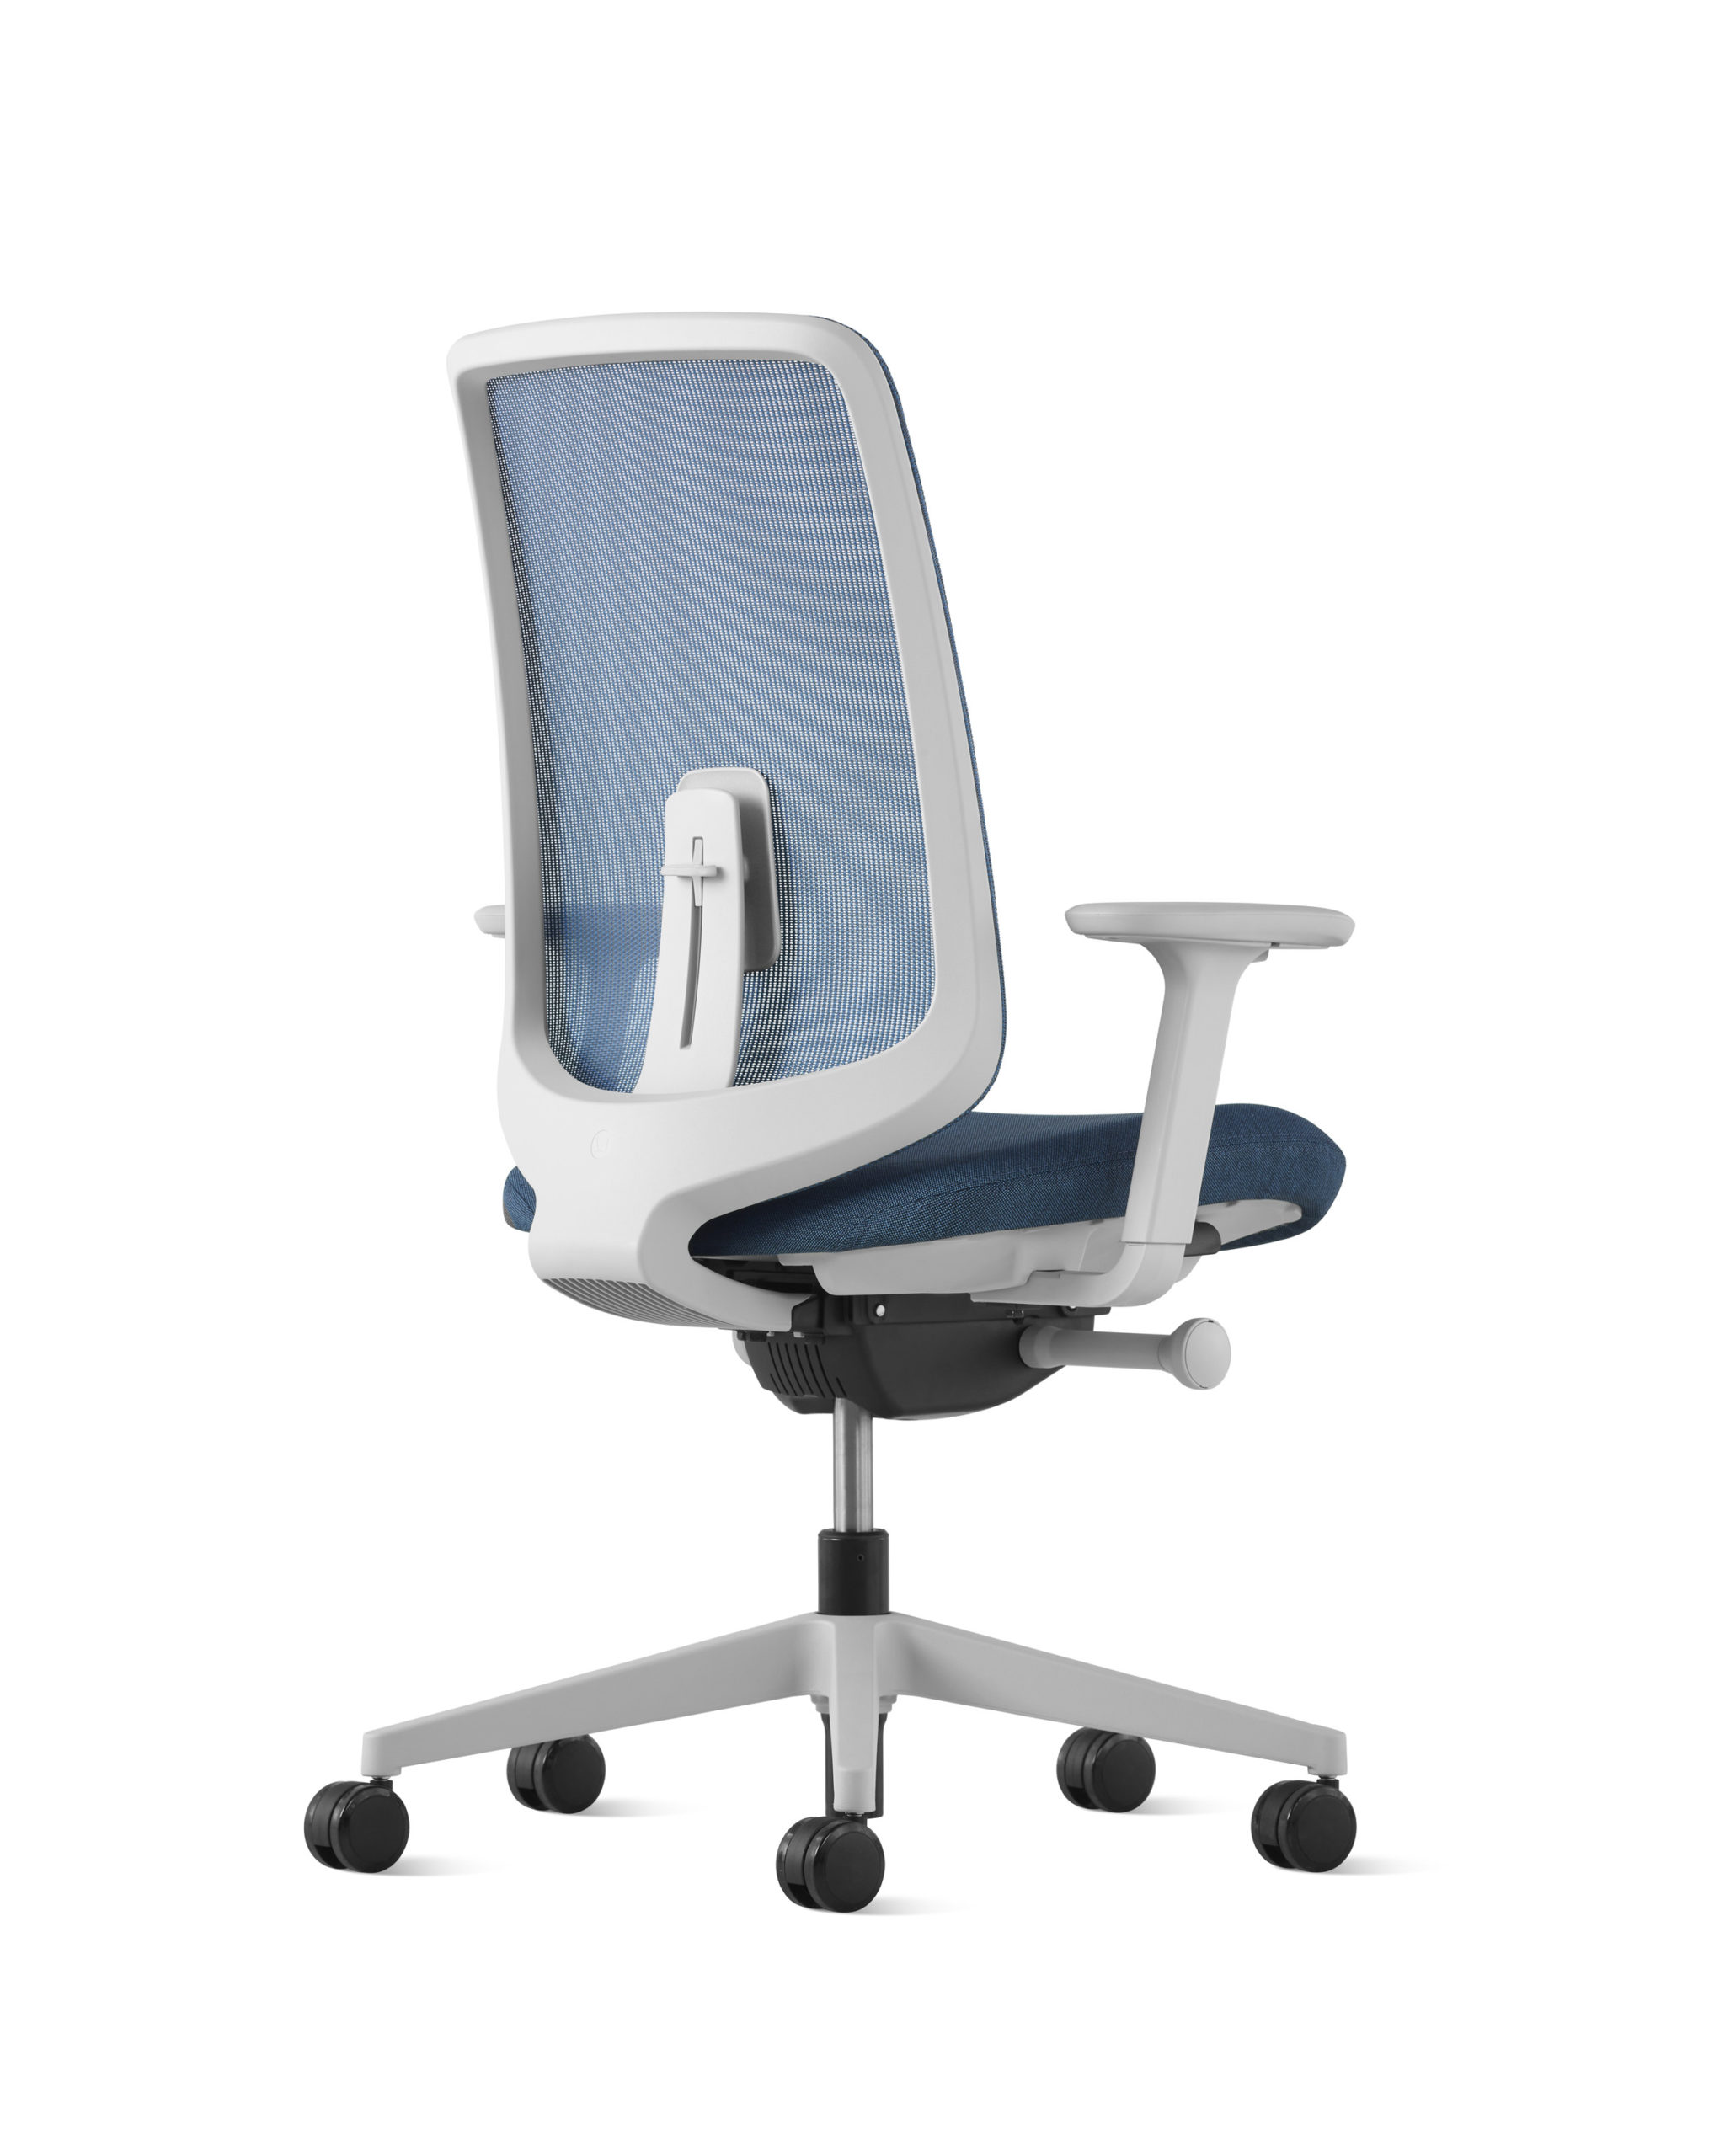 Verus Herman Miller silla ergonomica azul trasera